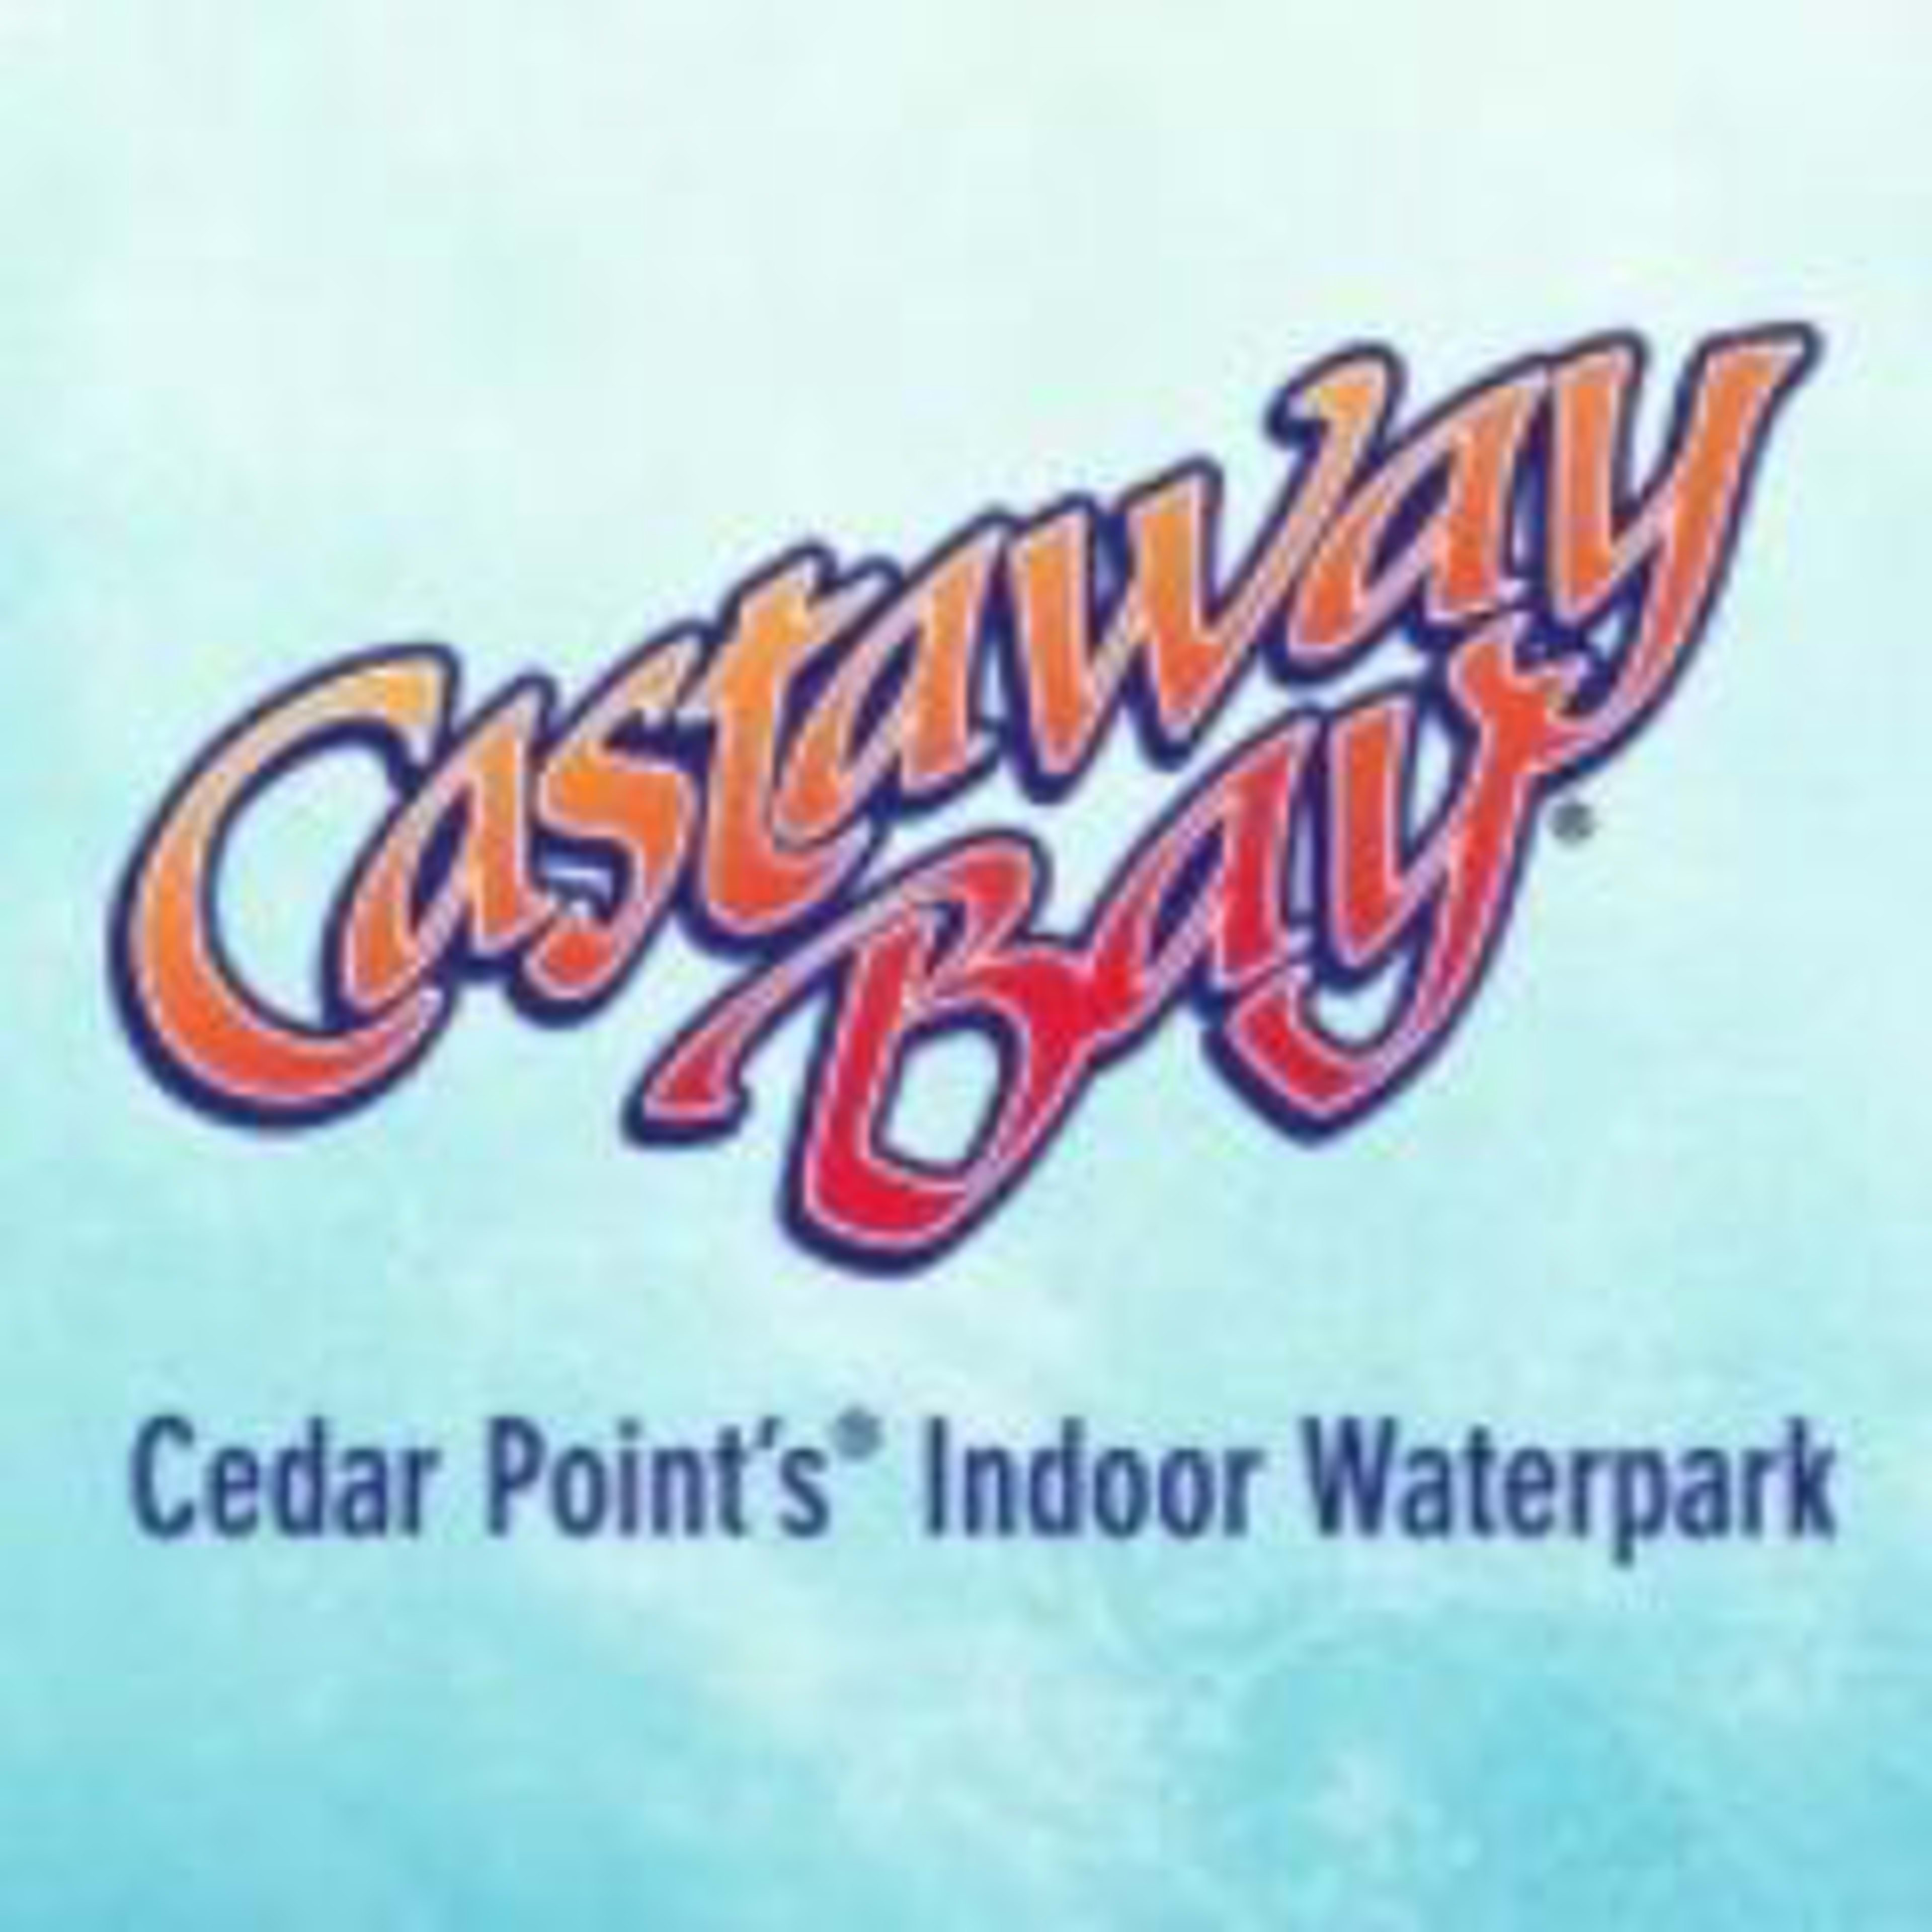 Castaway BayCode